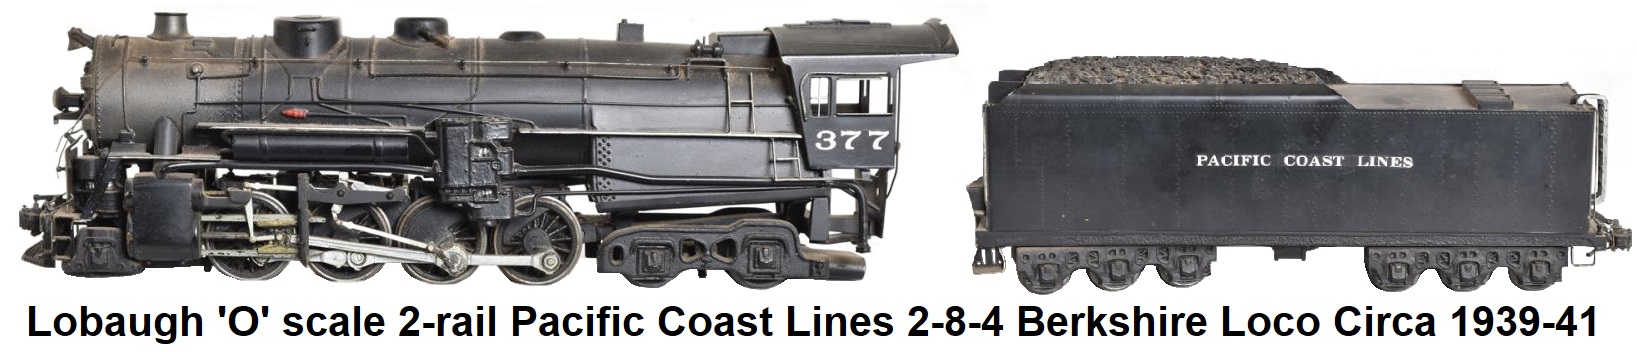 Lobaugh 'O' scale 2-rail Pacific Coast Lines 2-8-4 Berkshire steam locomotive and tender circa 1939-41